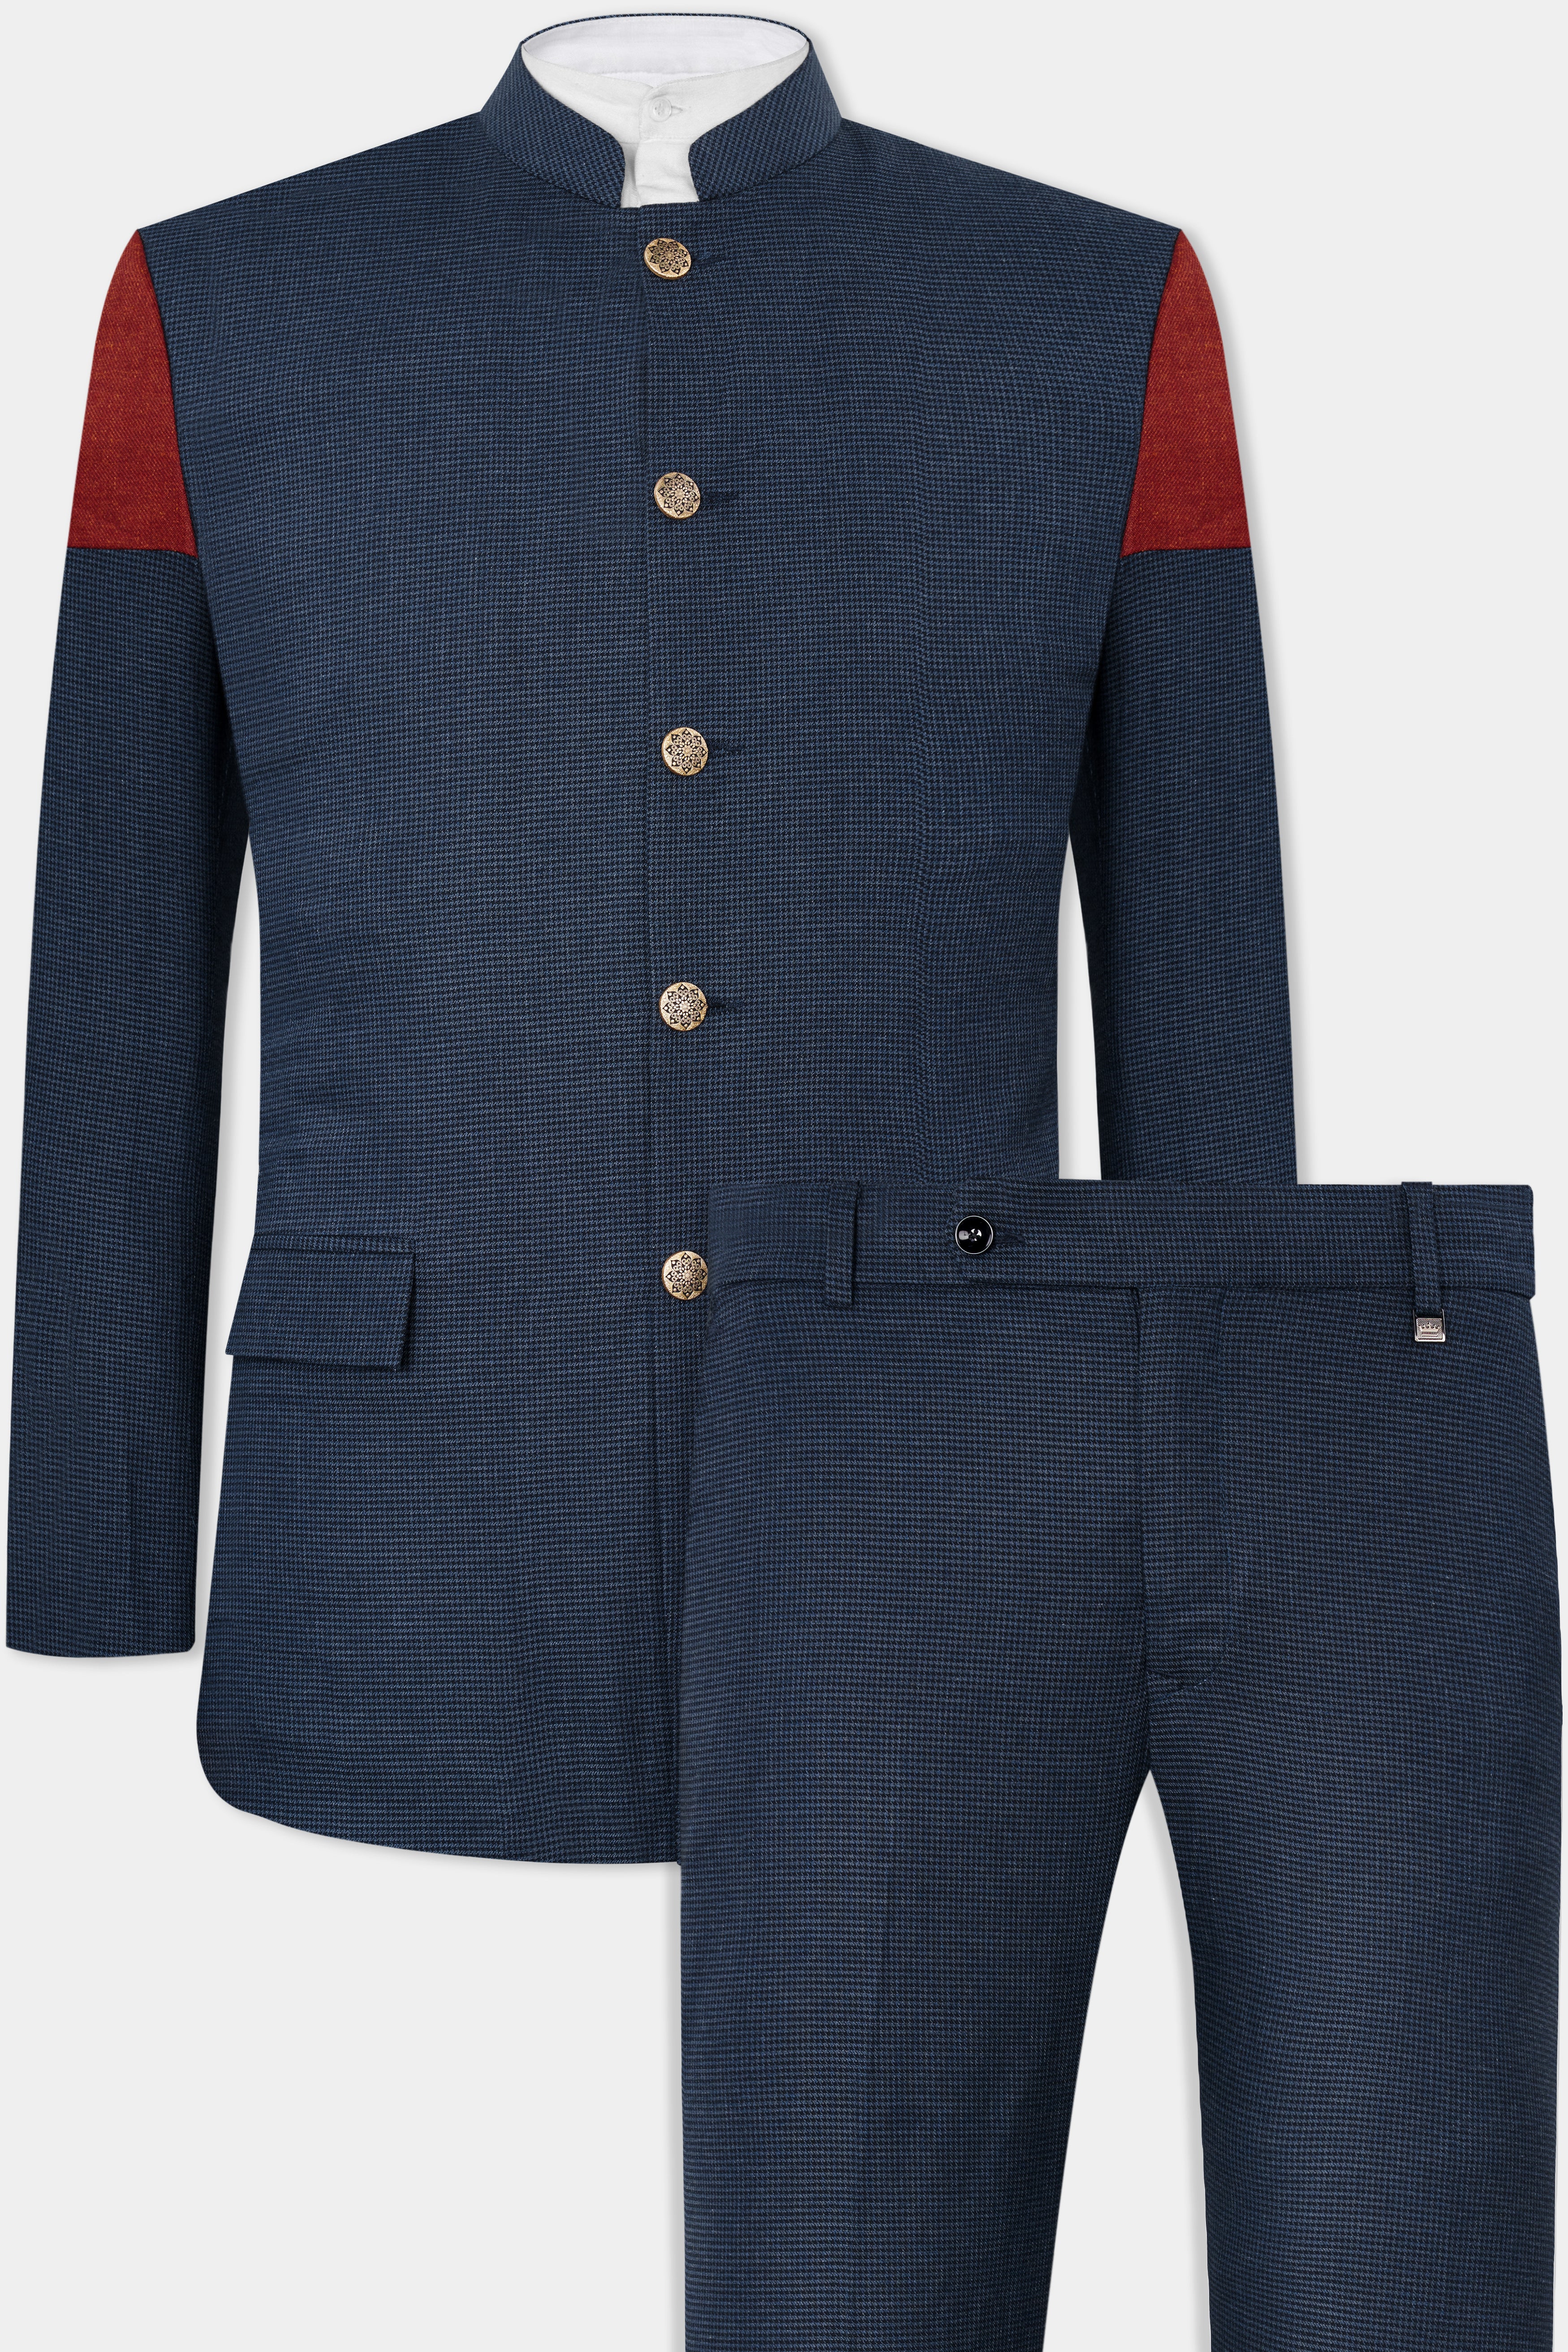 Limed Spruce Blue Wool Rich Bandhgala Designer Suit With Houndstooth Pattern ST2824-BG-D21-36,ST2824-BG-D21-38,ST2824-BG-D21-40,ST2824-BG-D21-42,ST2824-BG-D21-44,ST2824-BG-D21-46,ST2824-BG-D21-48,ST2824-BG-D21-50,ST2824-BG-D21-52,ST2824-BG-D21-54,ST2824-BG-D21-56,ST2824-BG-D21-58,ST2824-BG-D21-60